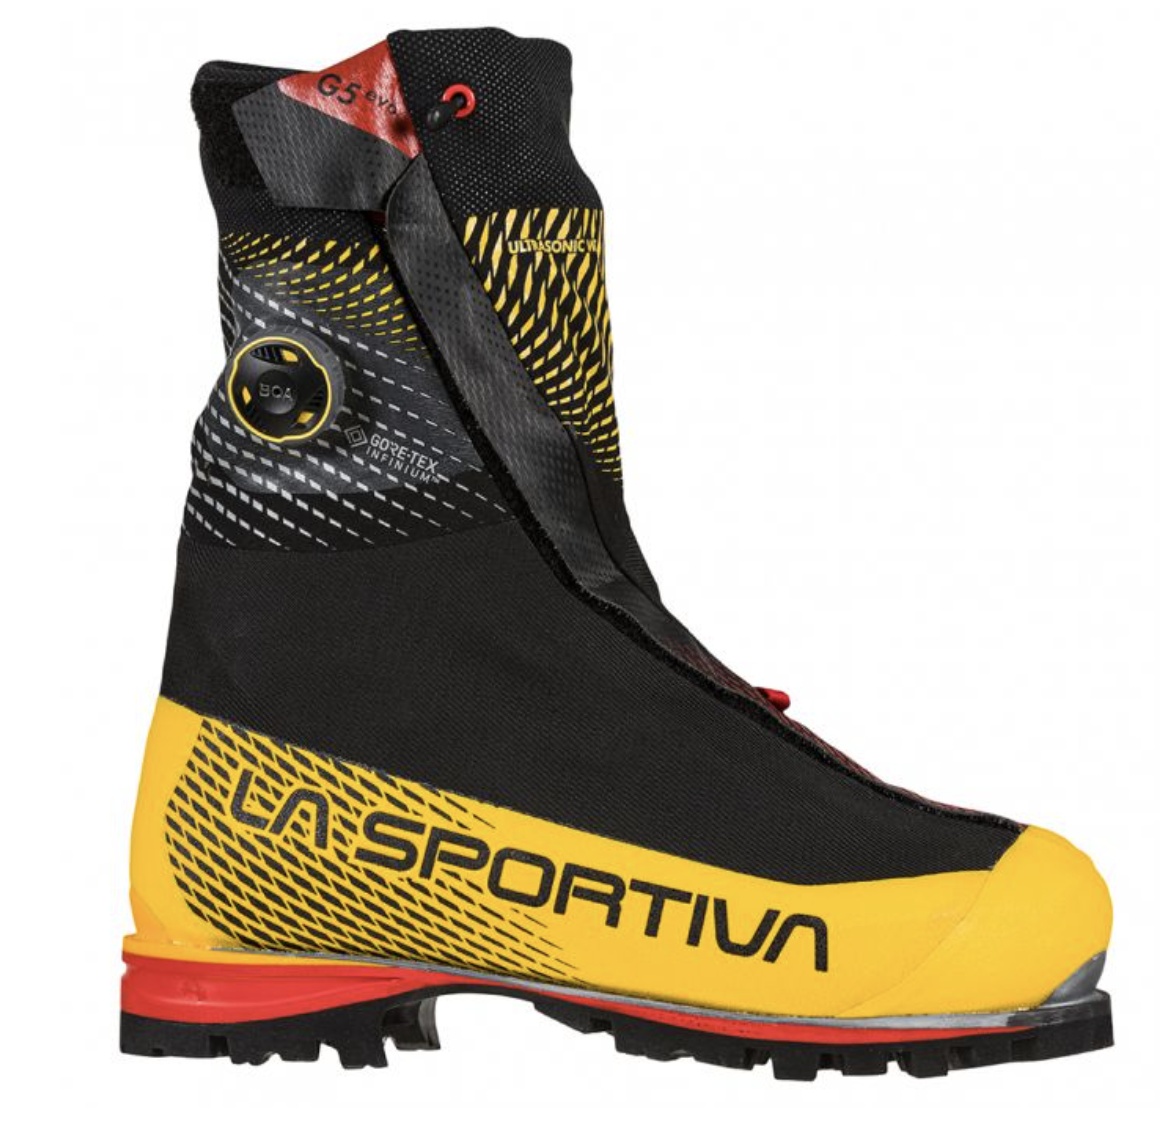 La Sportiva G-Tech Mountaineering Boot